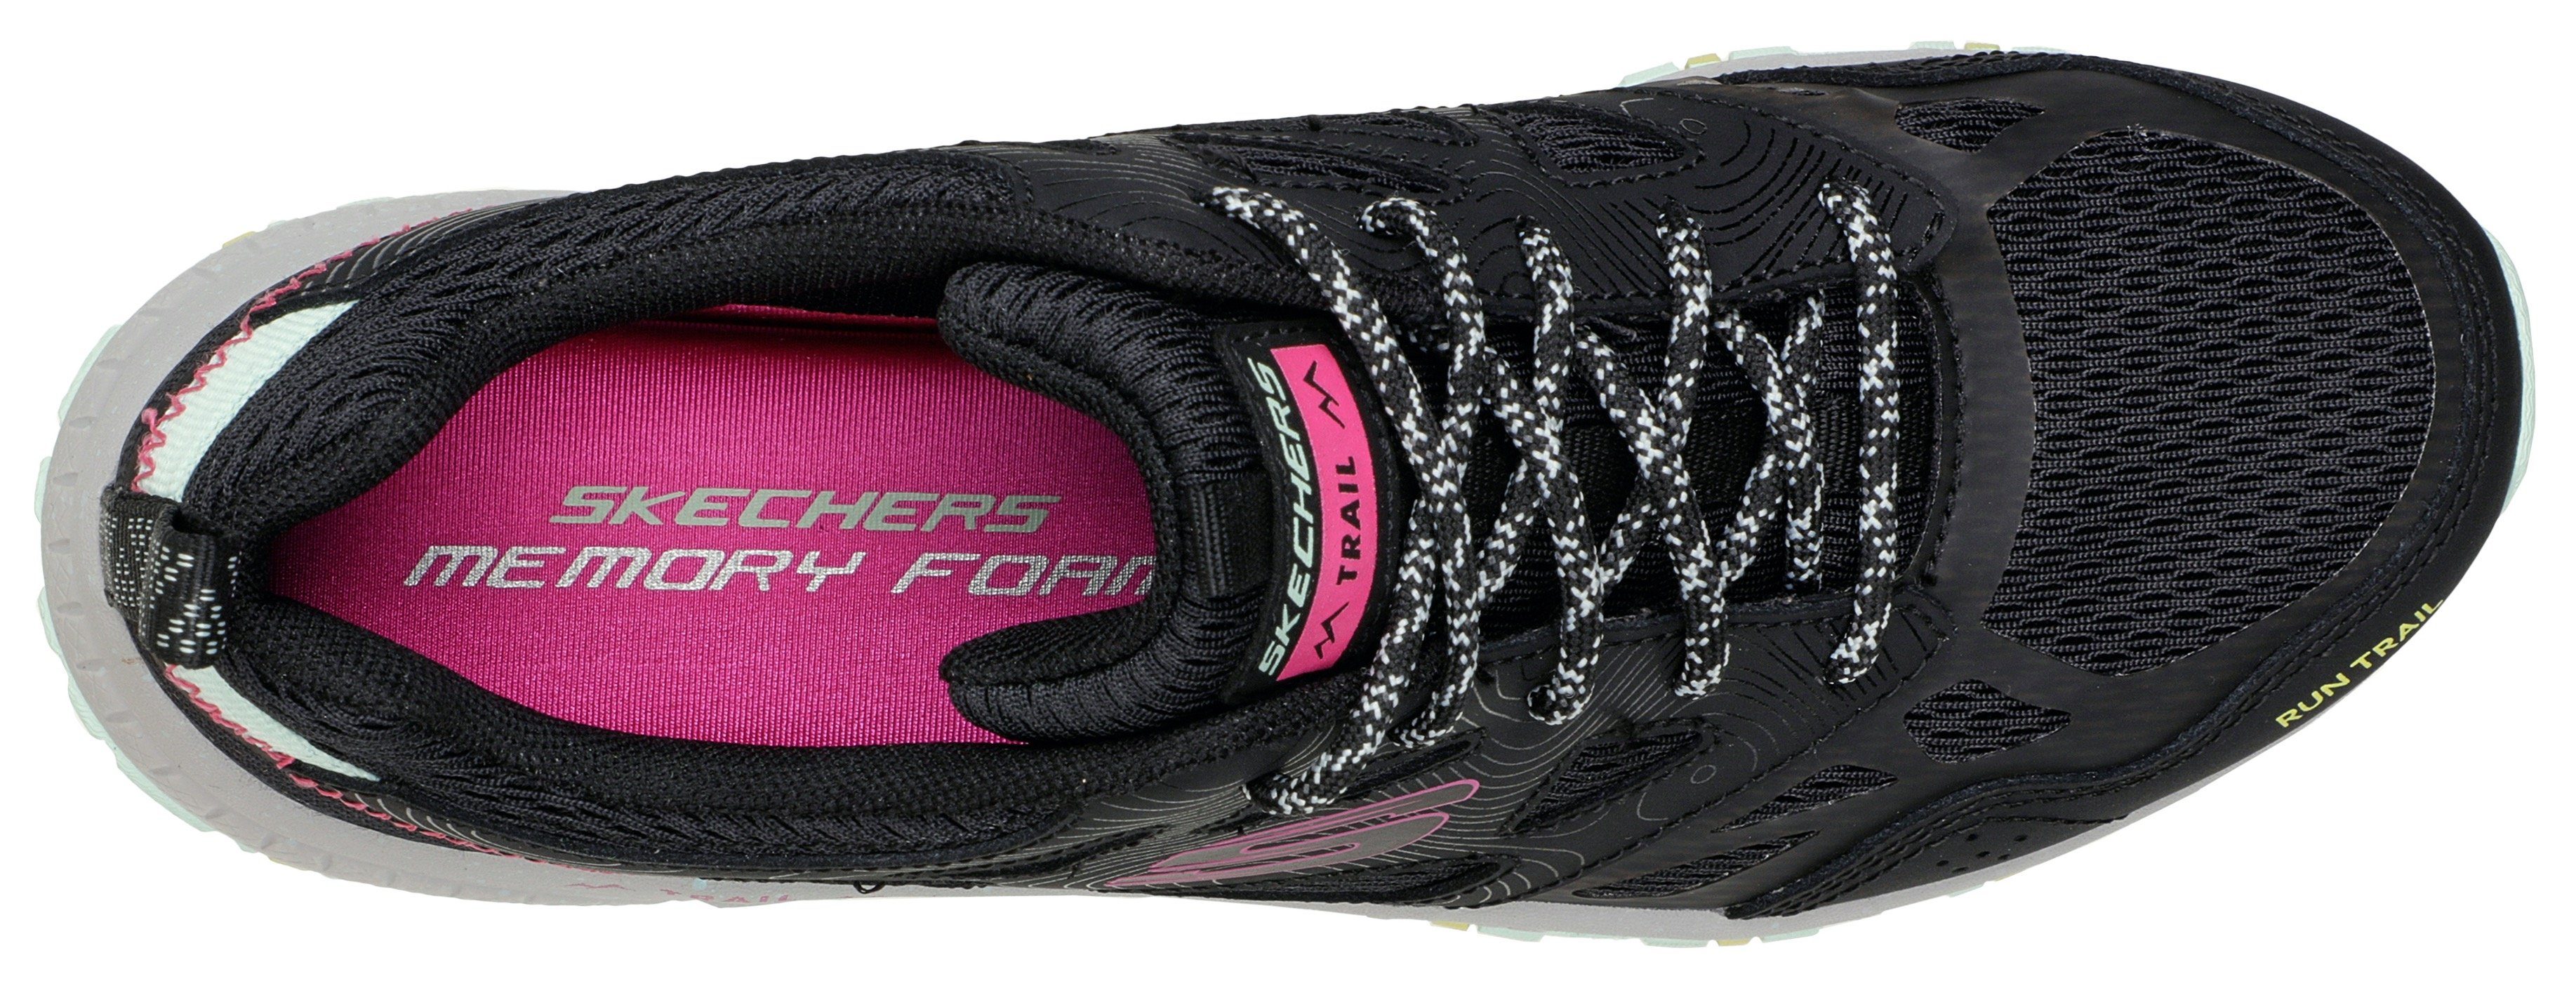 Skechers HILLCREST Sneaker schwarz-kombiniert im Materialmix PURE ESCAPADE